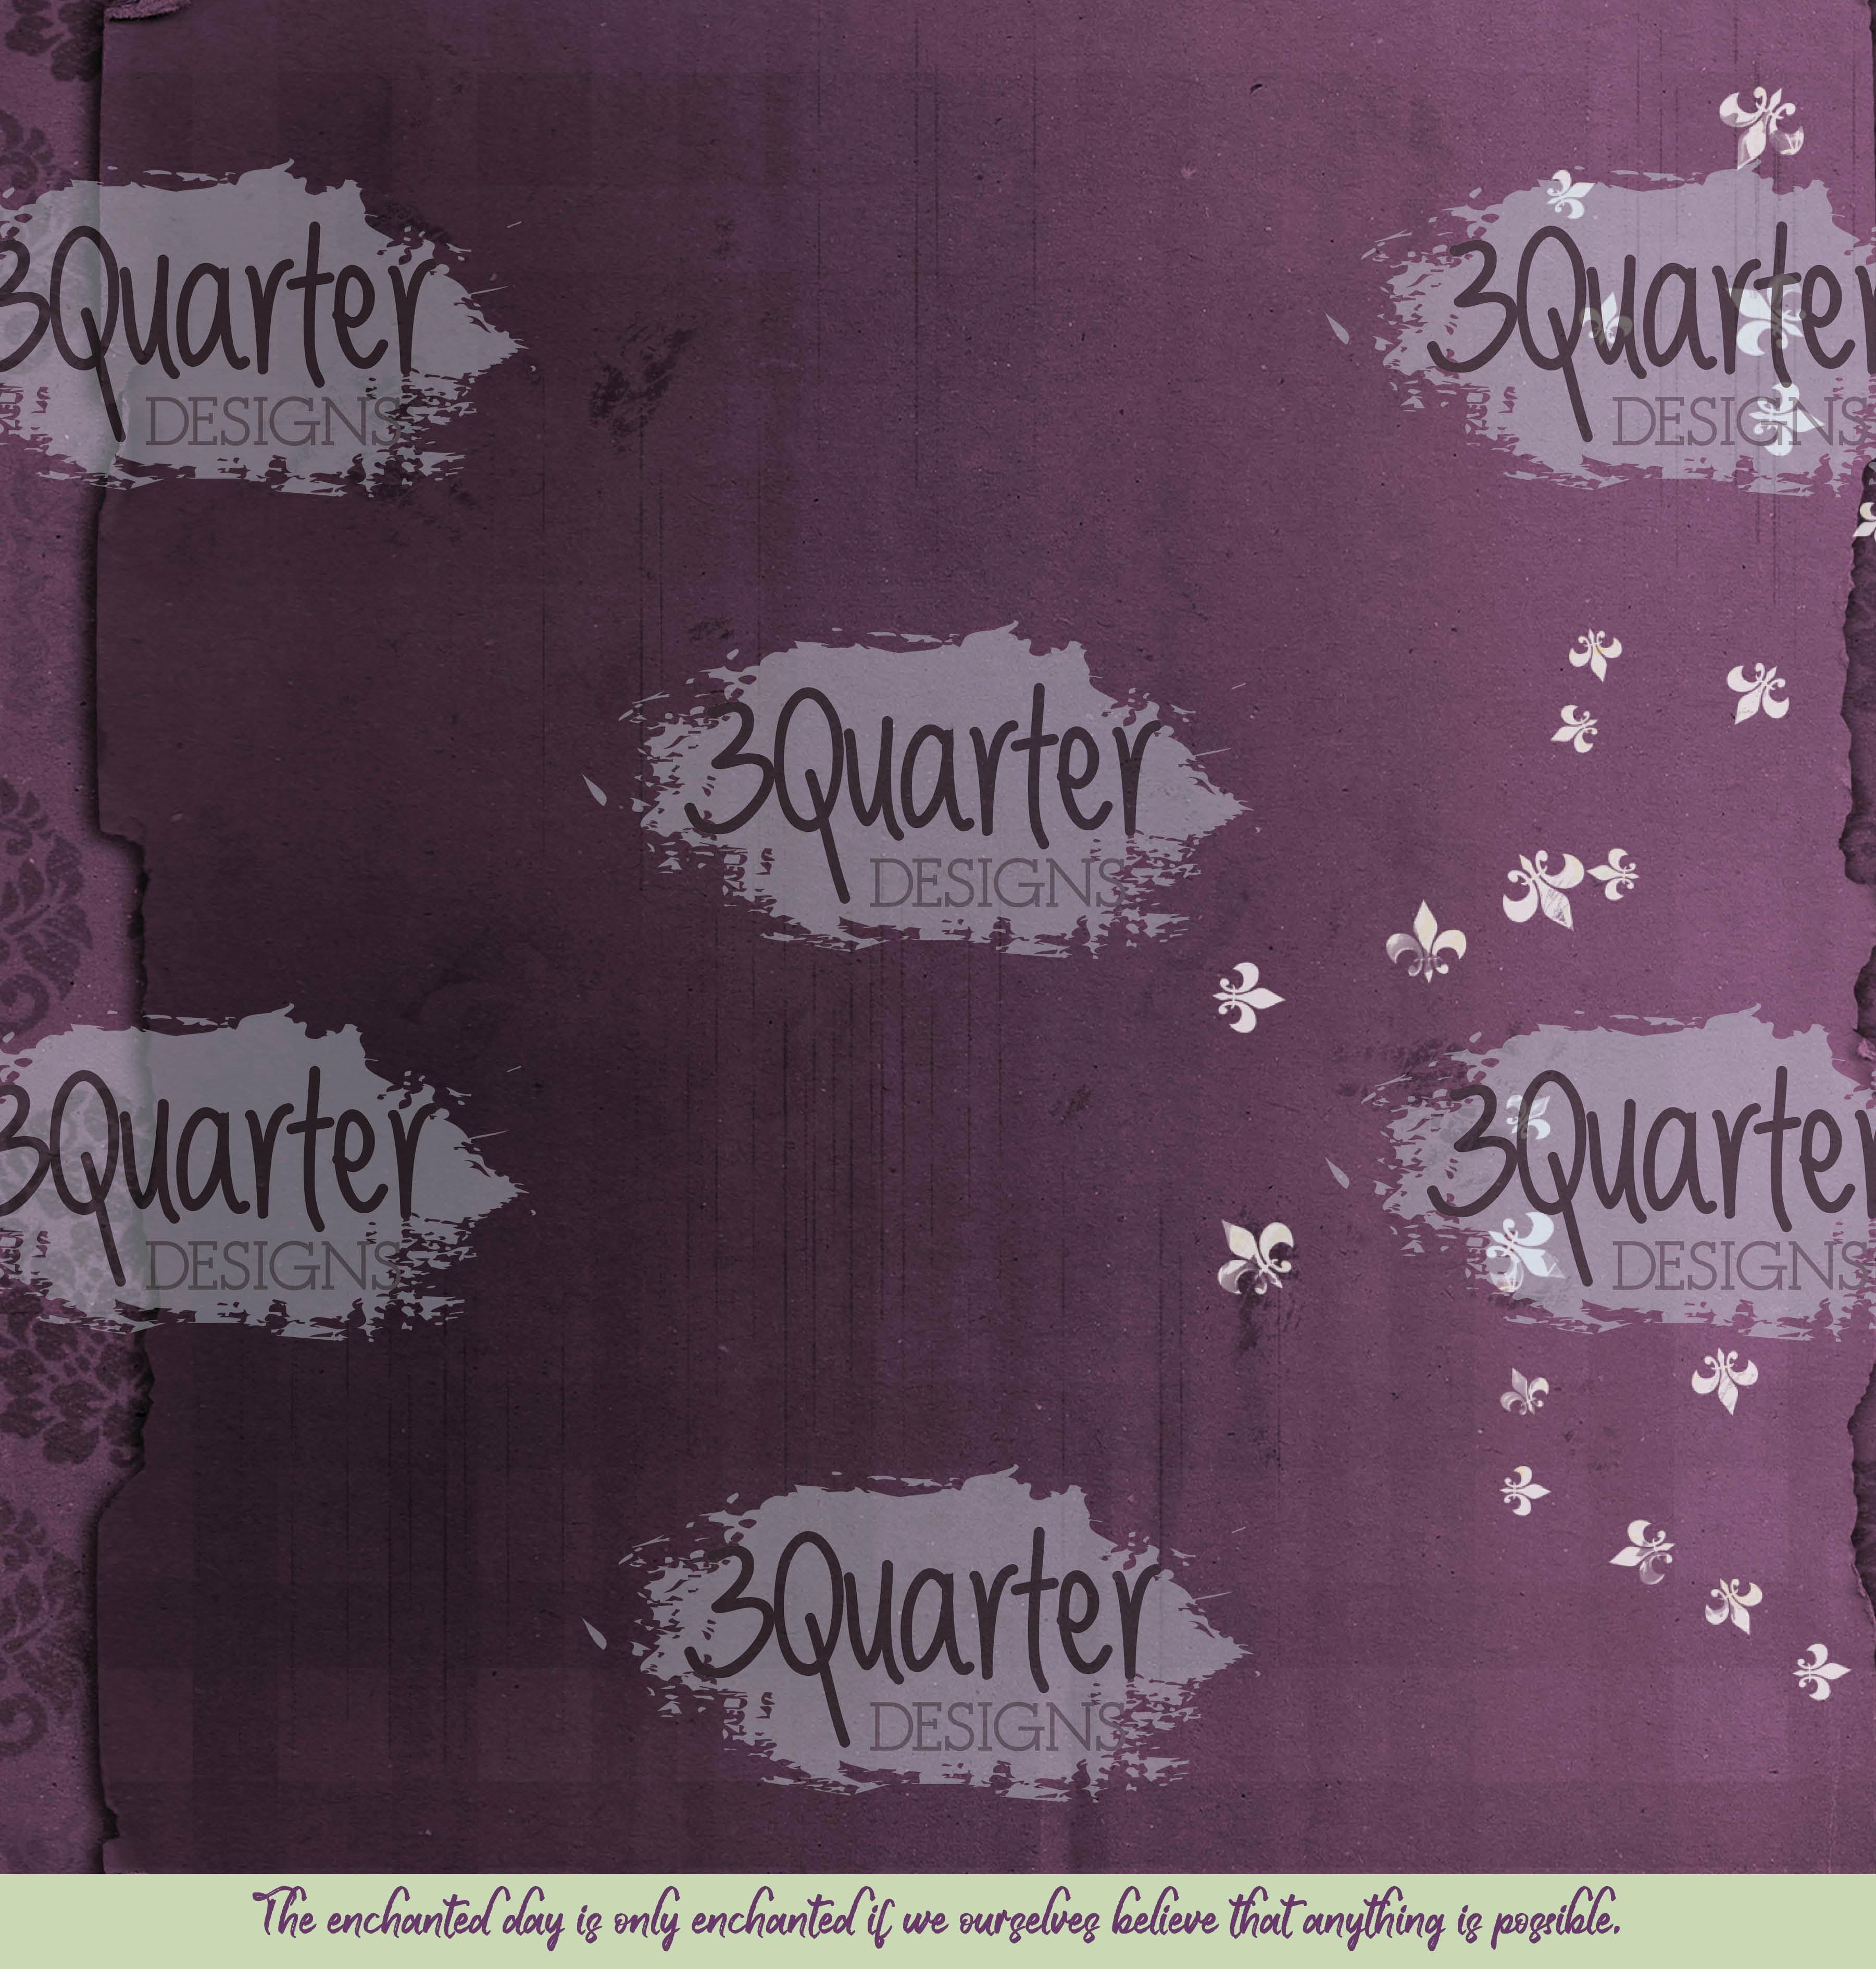 3Quarter Designs - Enchanted Amethyst - Scrapbook Collection